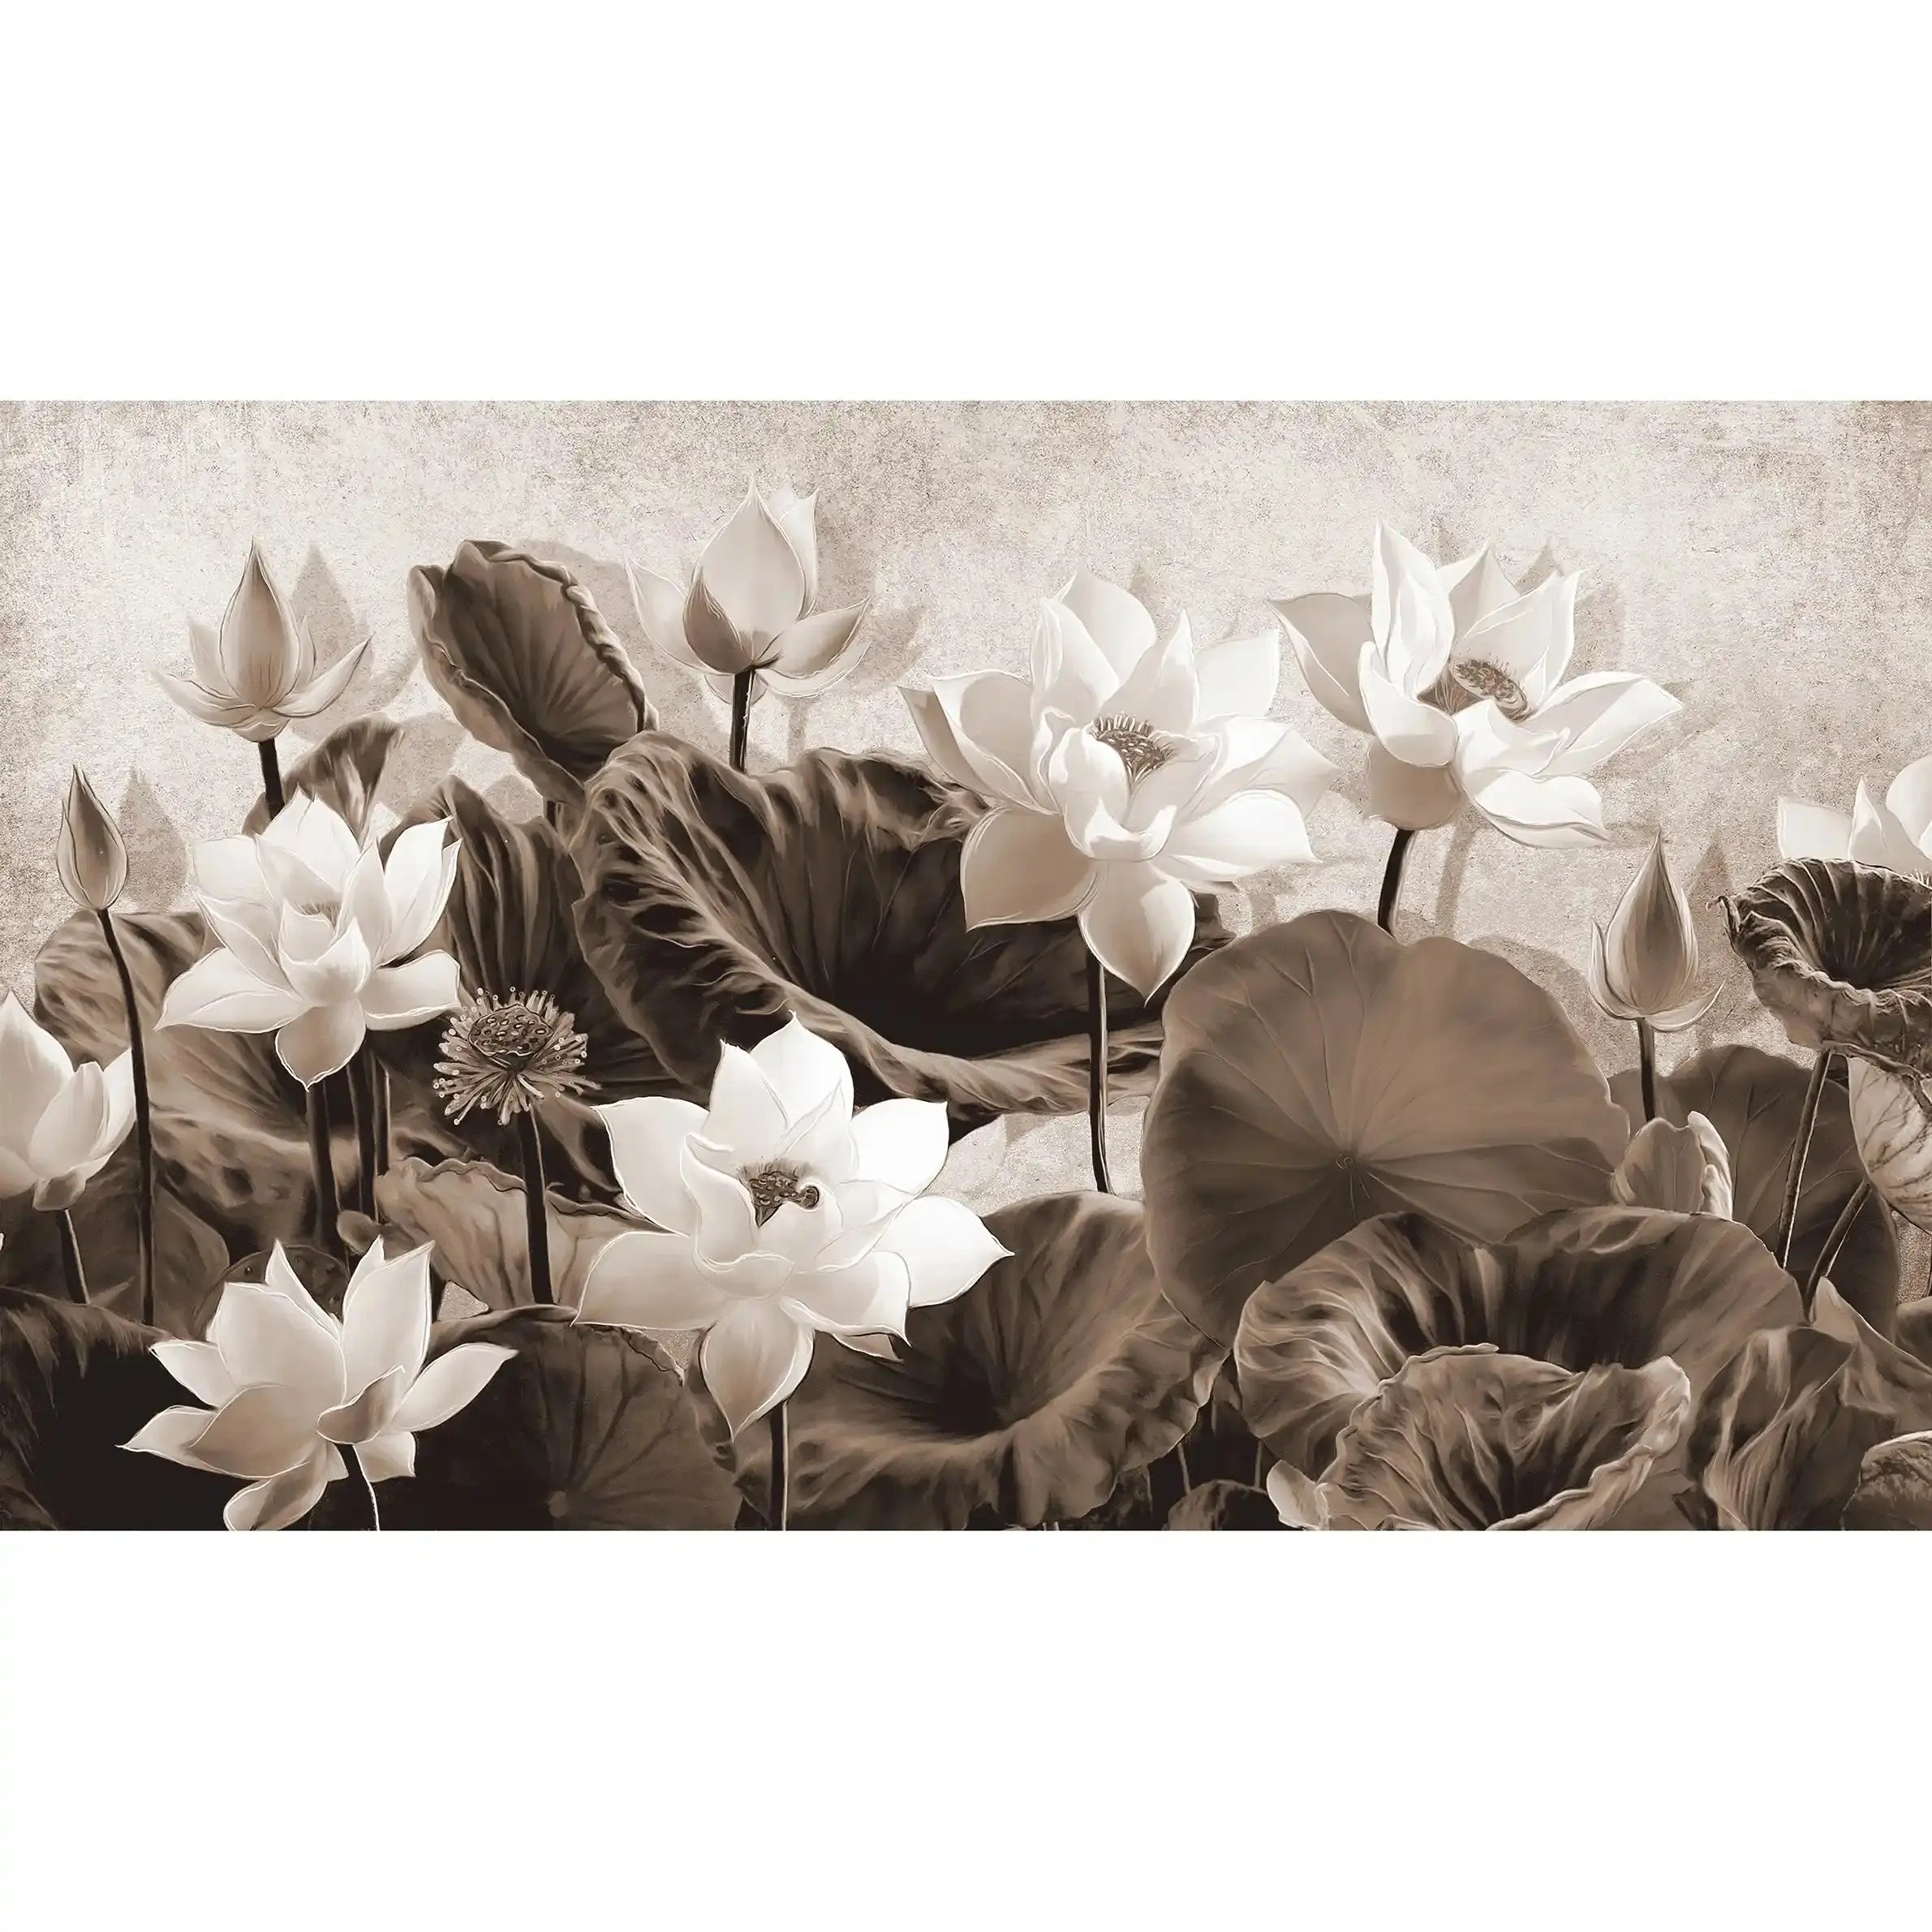 3019-C / Botanical Wallpaper: Self-Adhesive Lotus Blossom, Modern Room Decor for Easy Peel and Stick Installations - Artevella